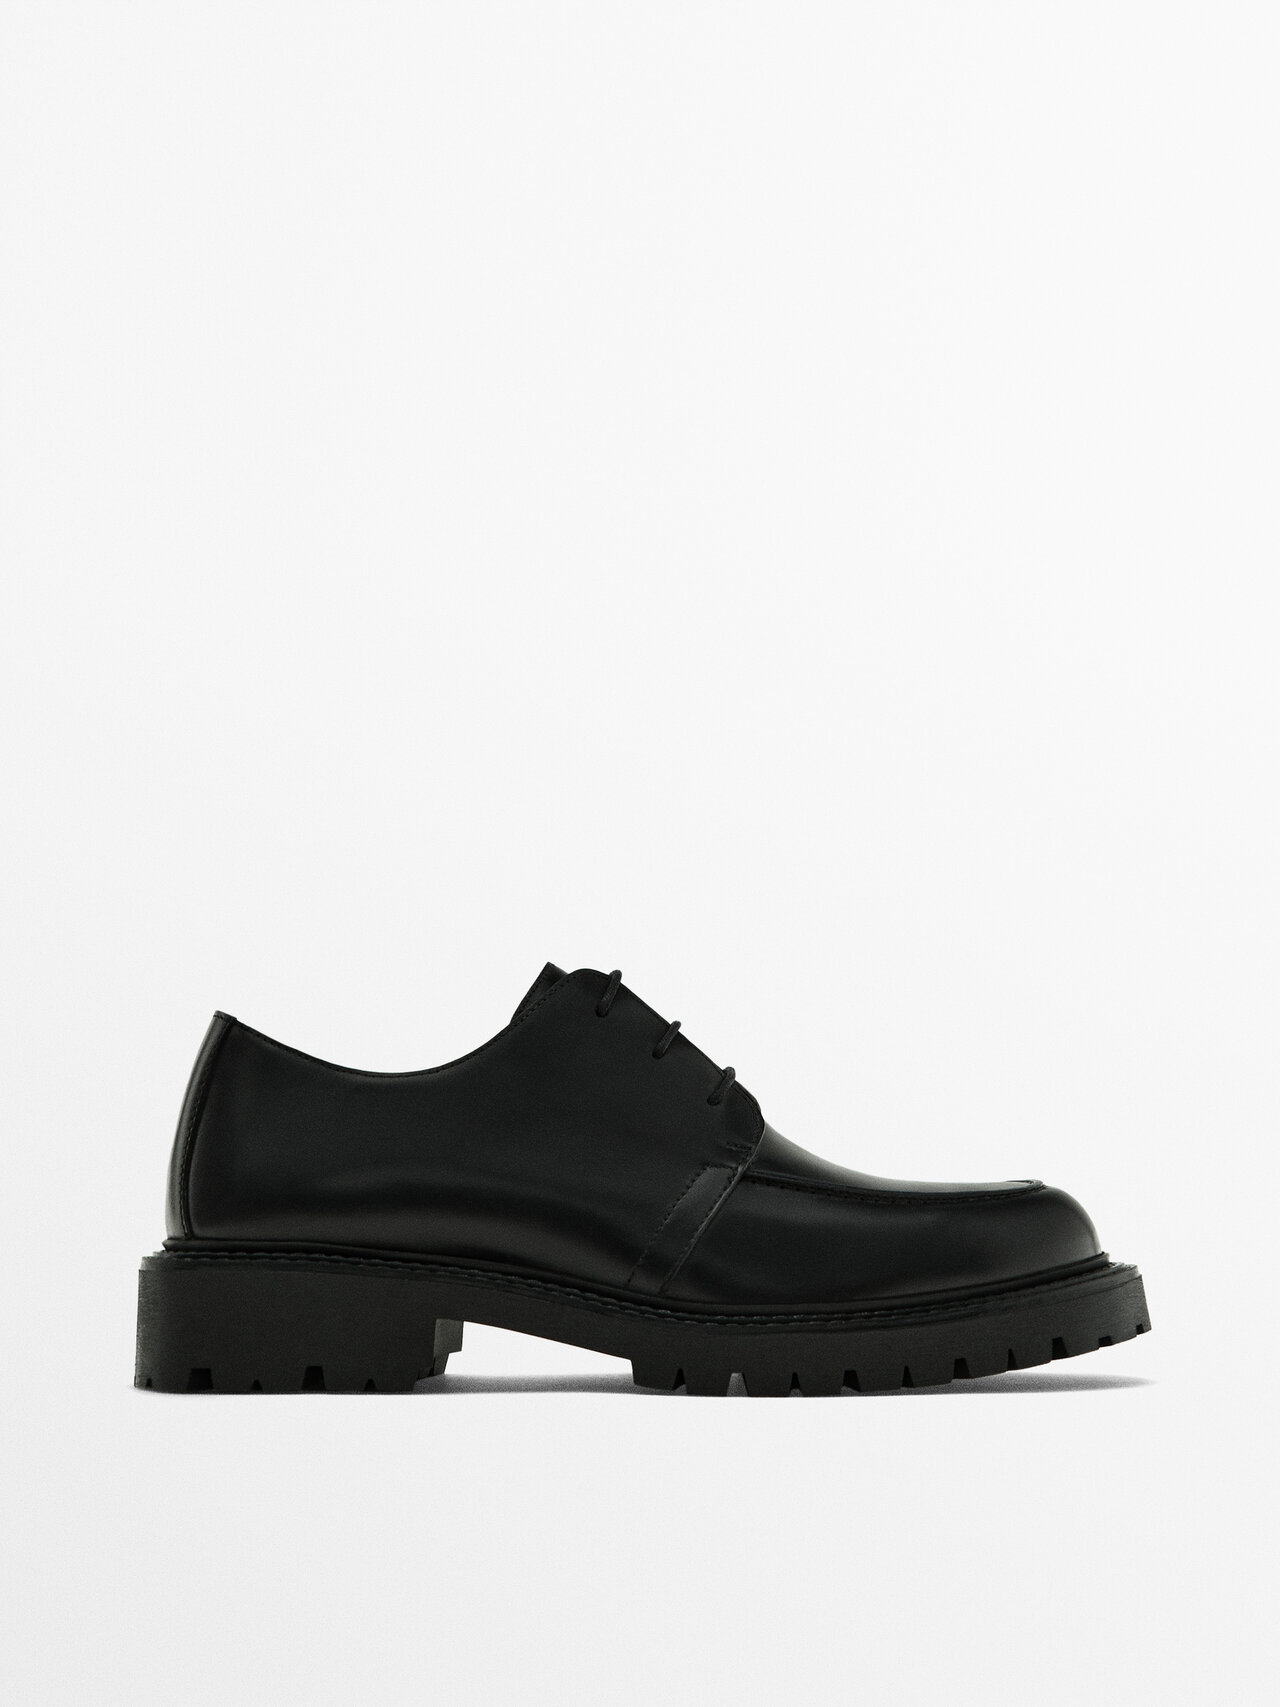 Massimo Dutti Black Moc Toe Shoes